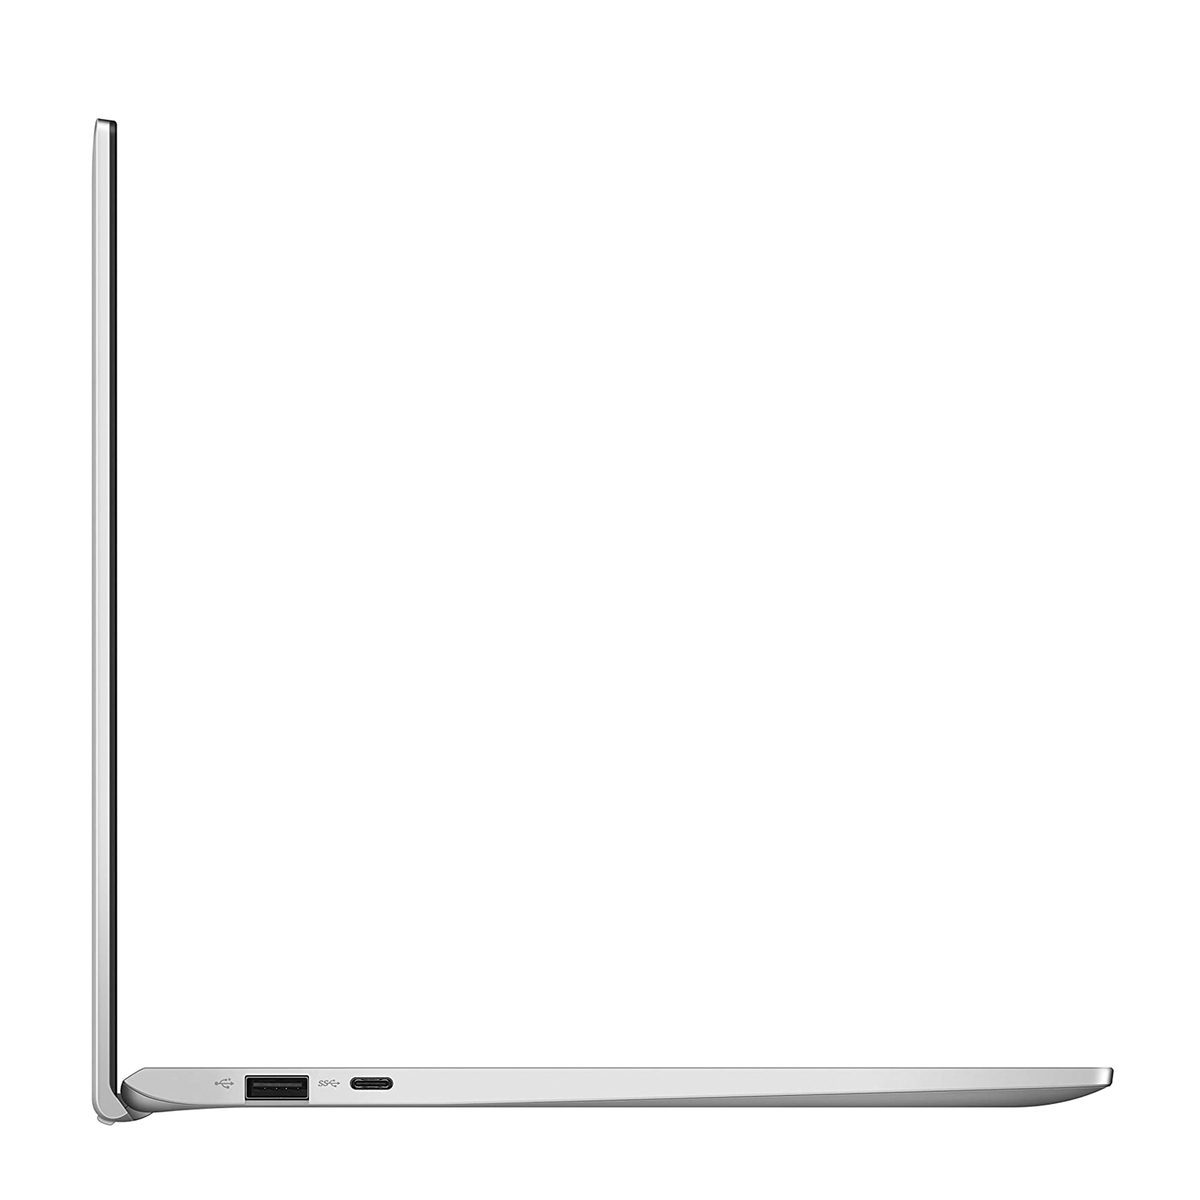 28+ Harga Laptop Asus Vivobook 14 A420 Trending